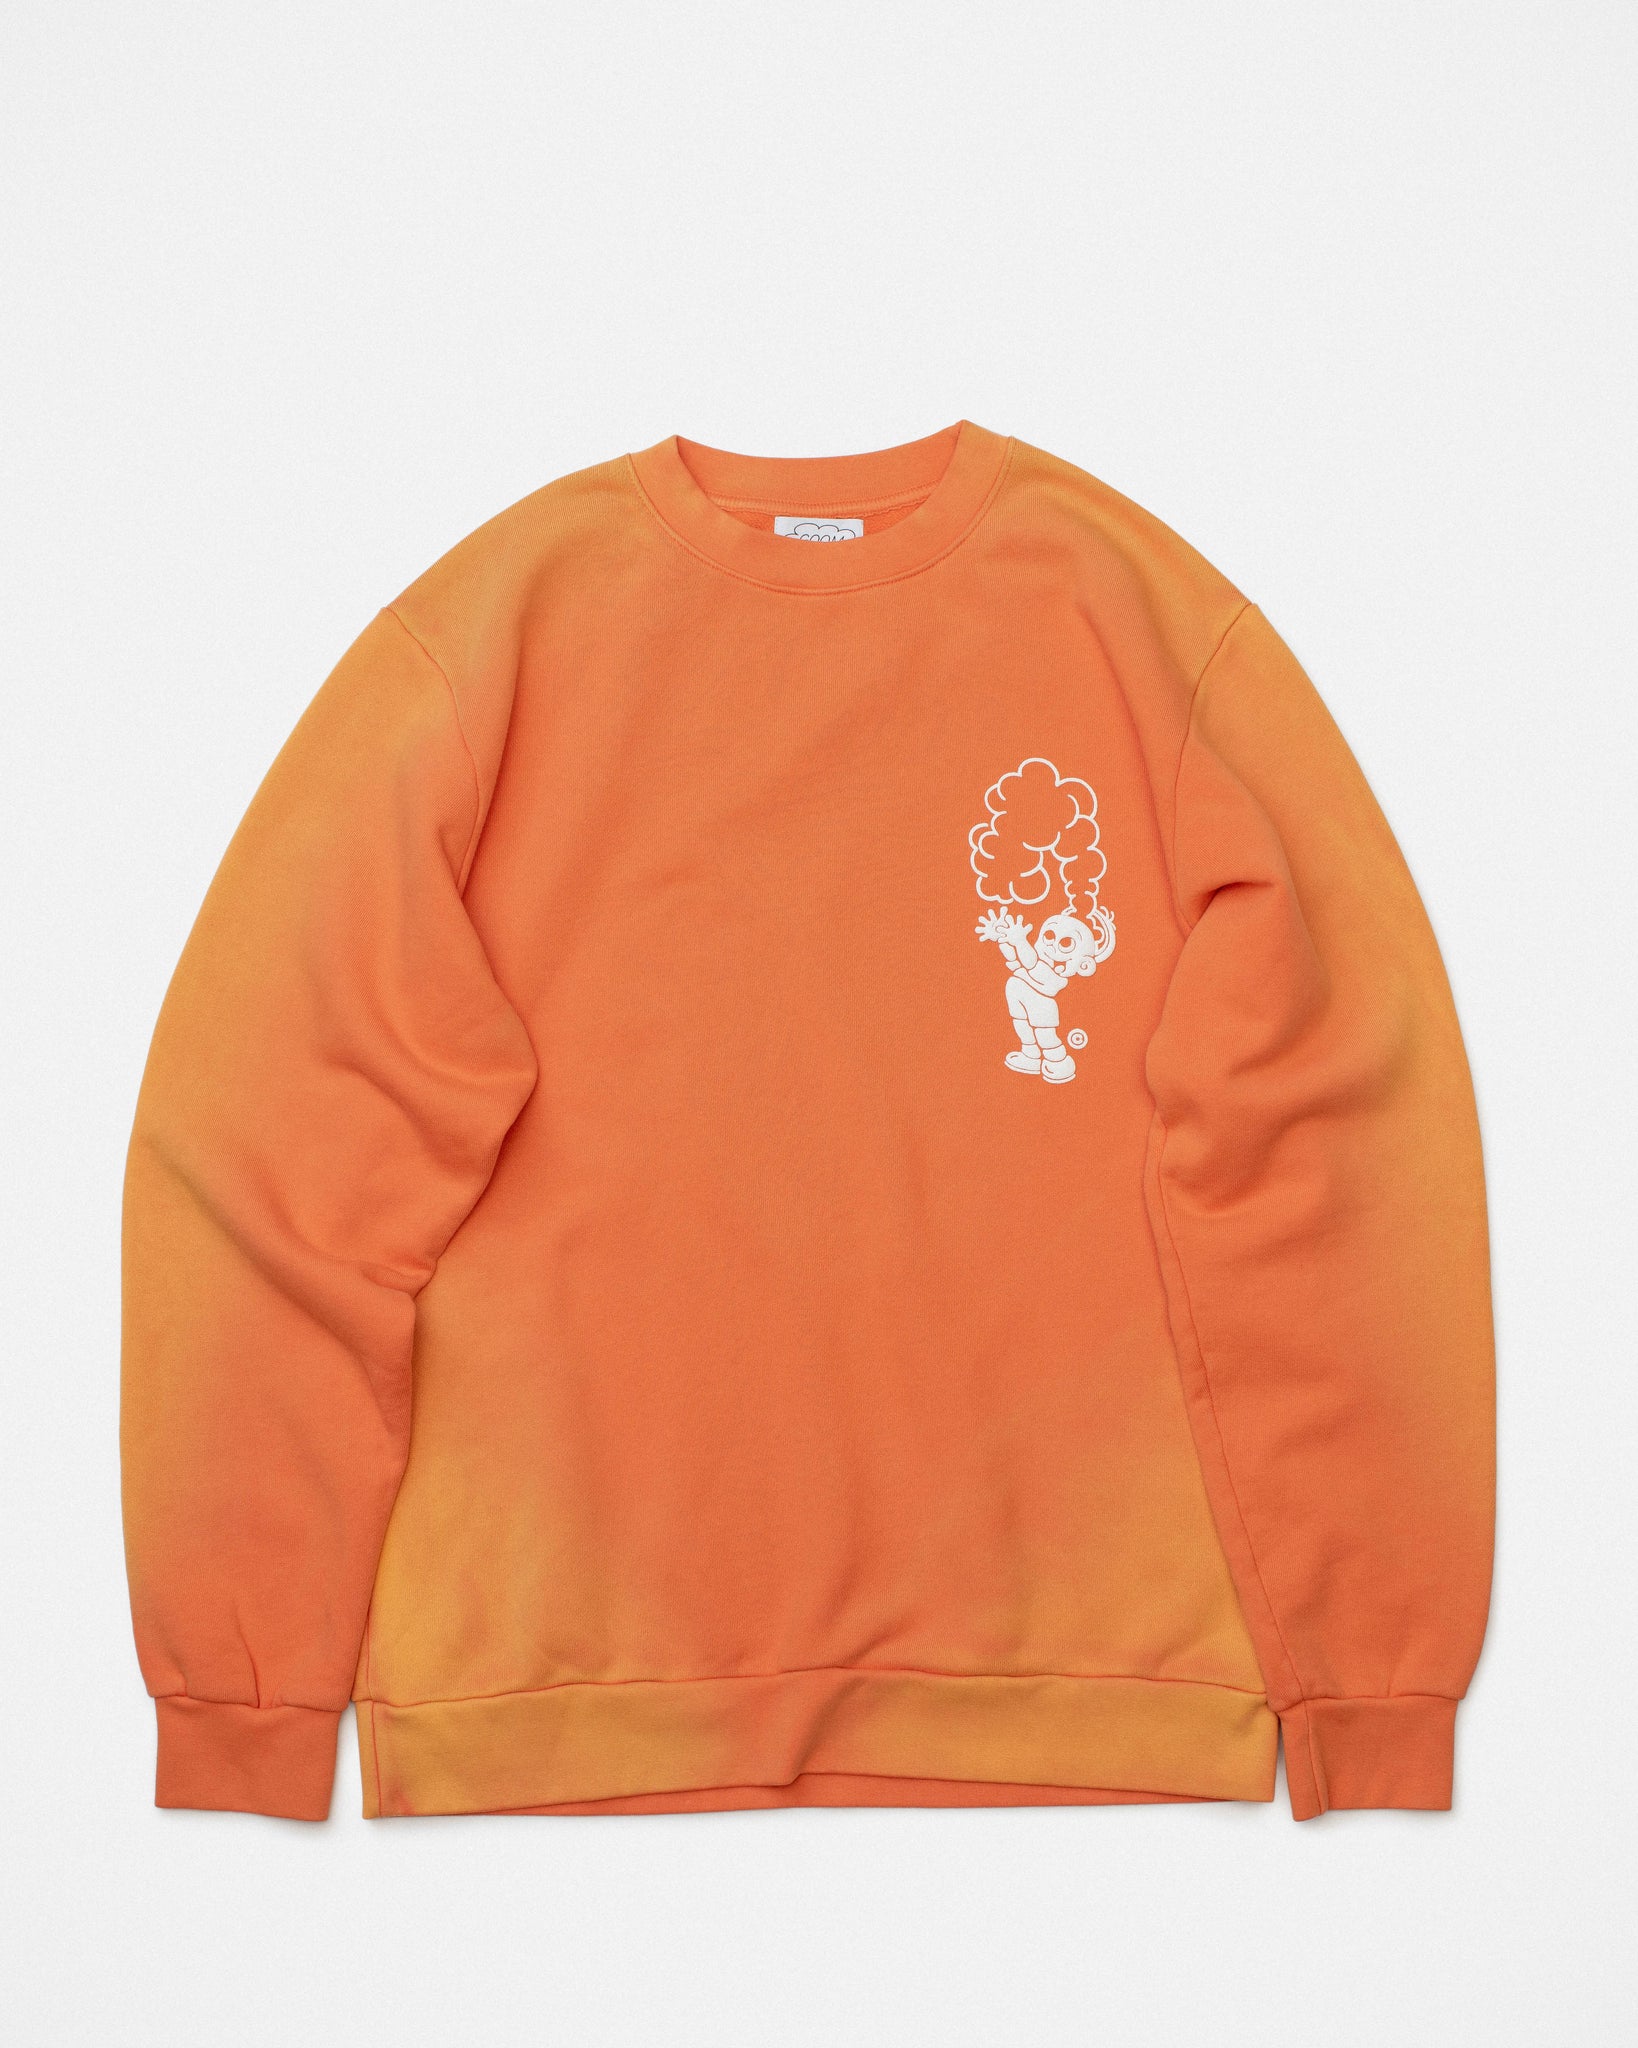 Cloudhead Sweatshirt - Sun faded Orange